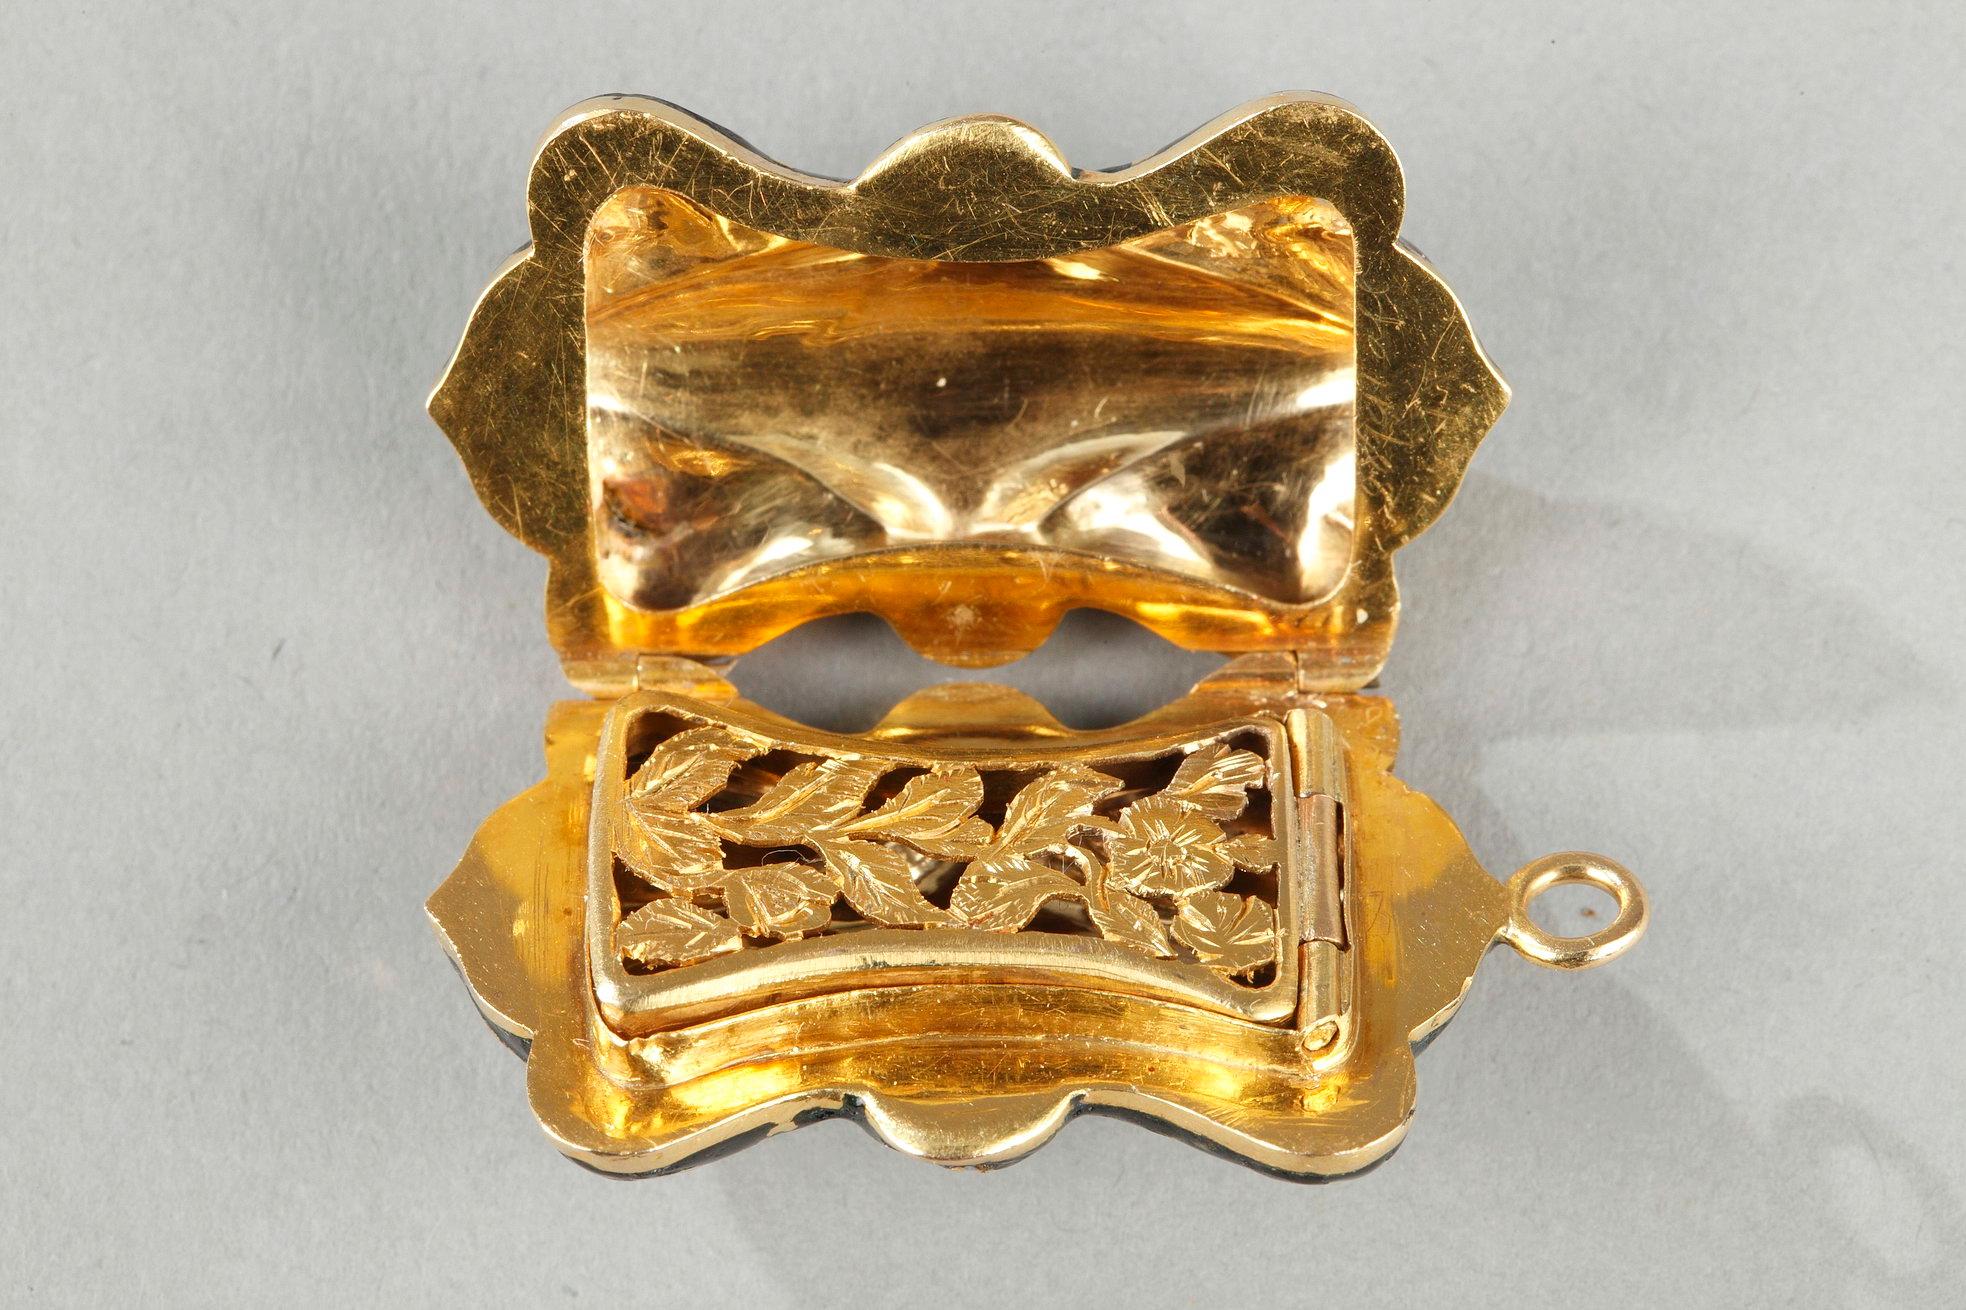 Gold and Enamel Vinaigrette, Mid-19th Century Work For Sale 1